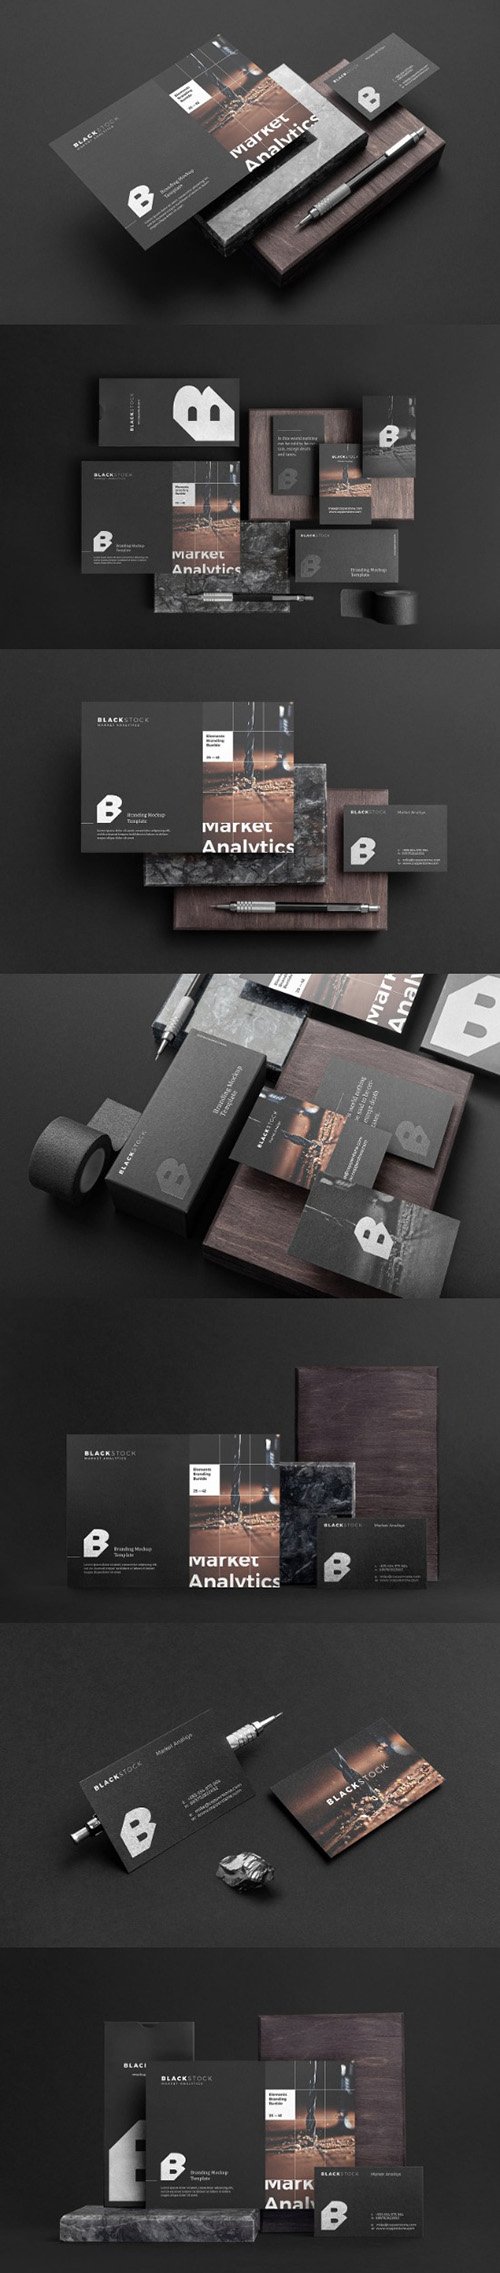 Download Blackstone Branding Mockup Vol. 1 PSD » NitroGFX - Download Unique Graphics For Creative Designers